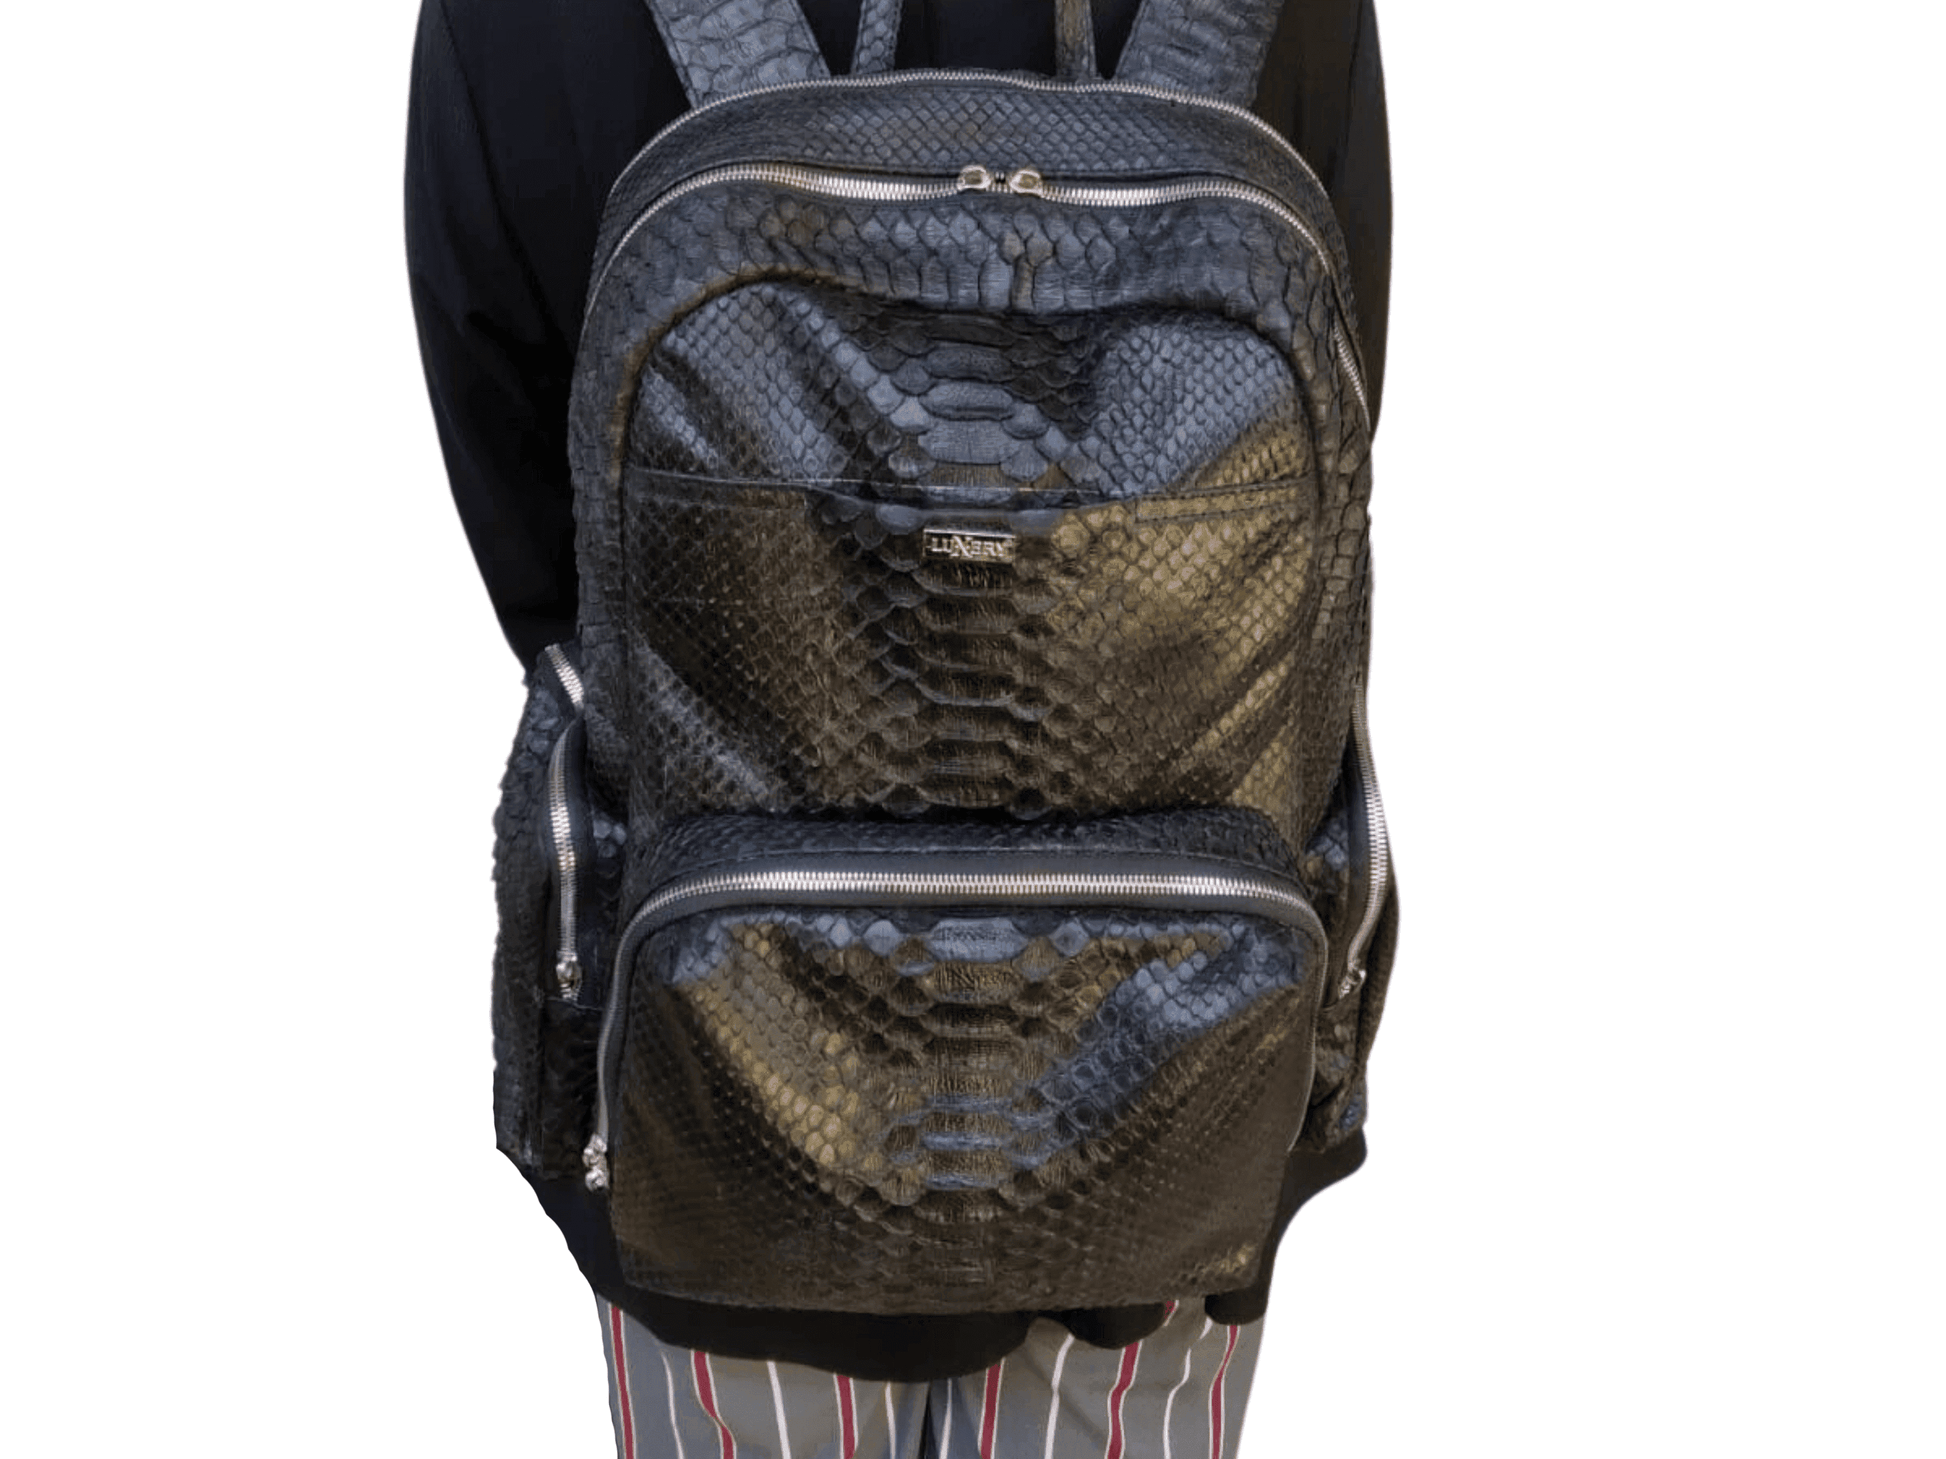 Black Snakeskin Backpack Python Jacket by LFM Fashion